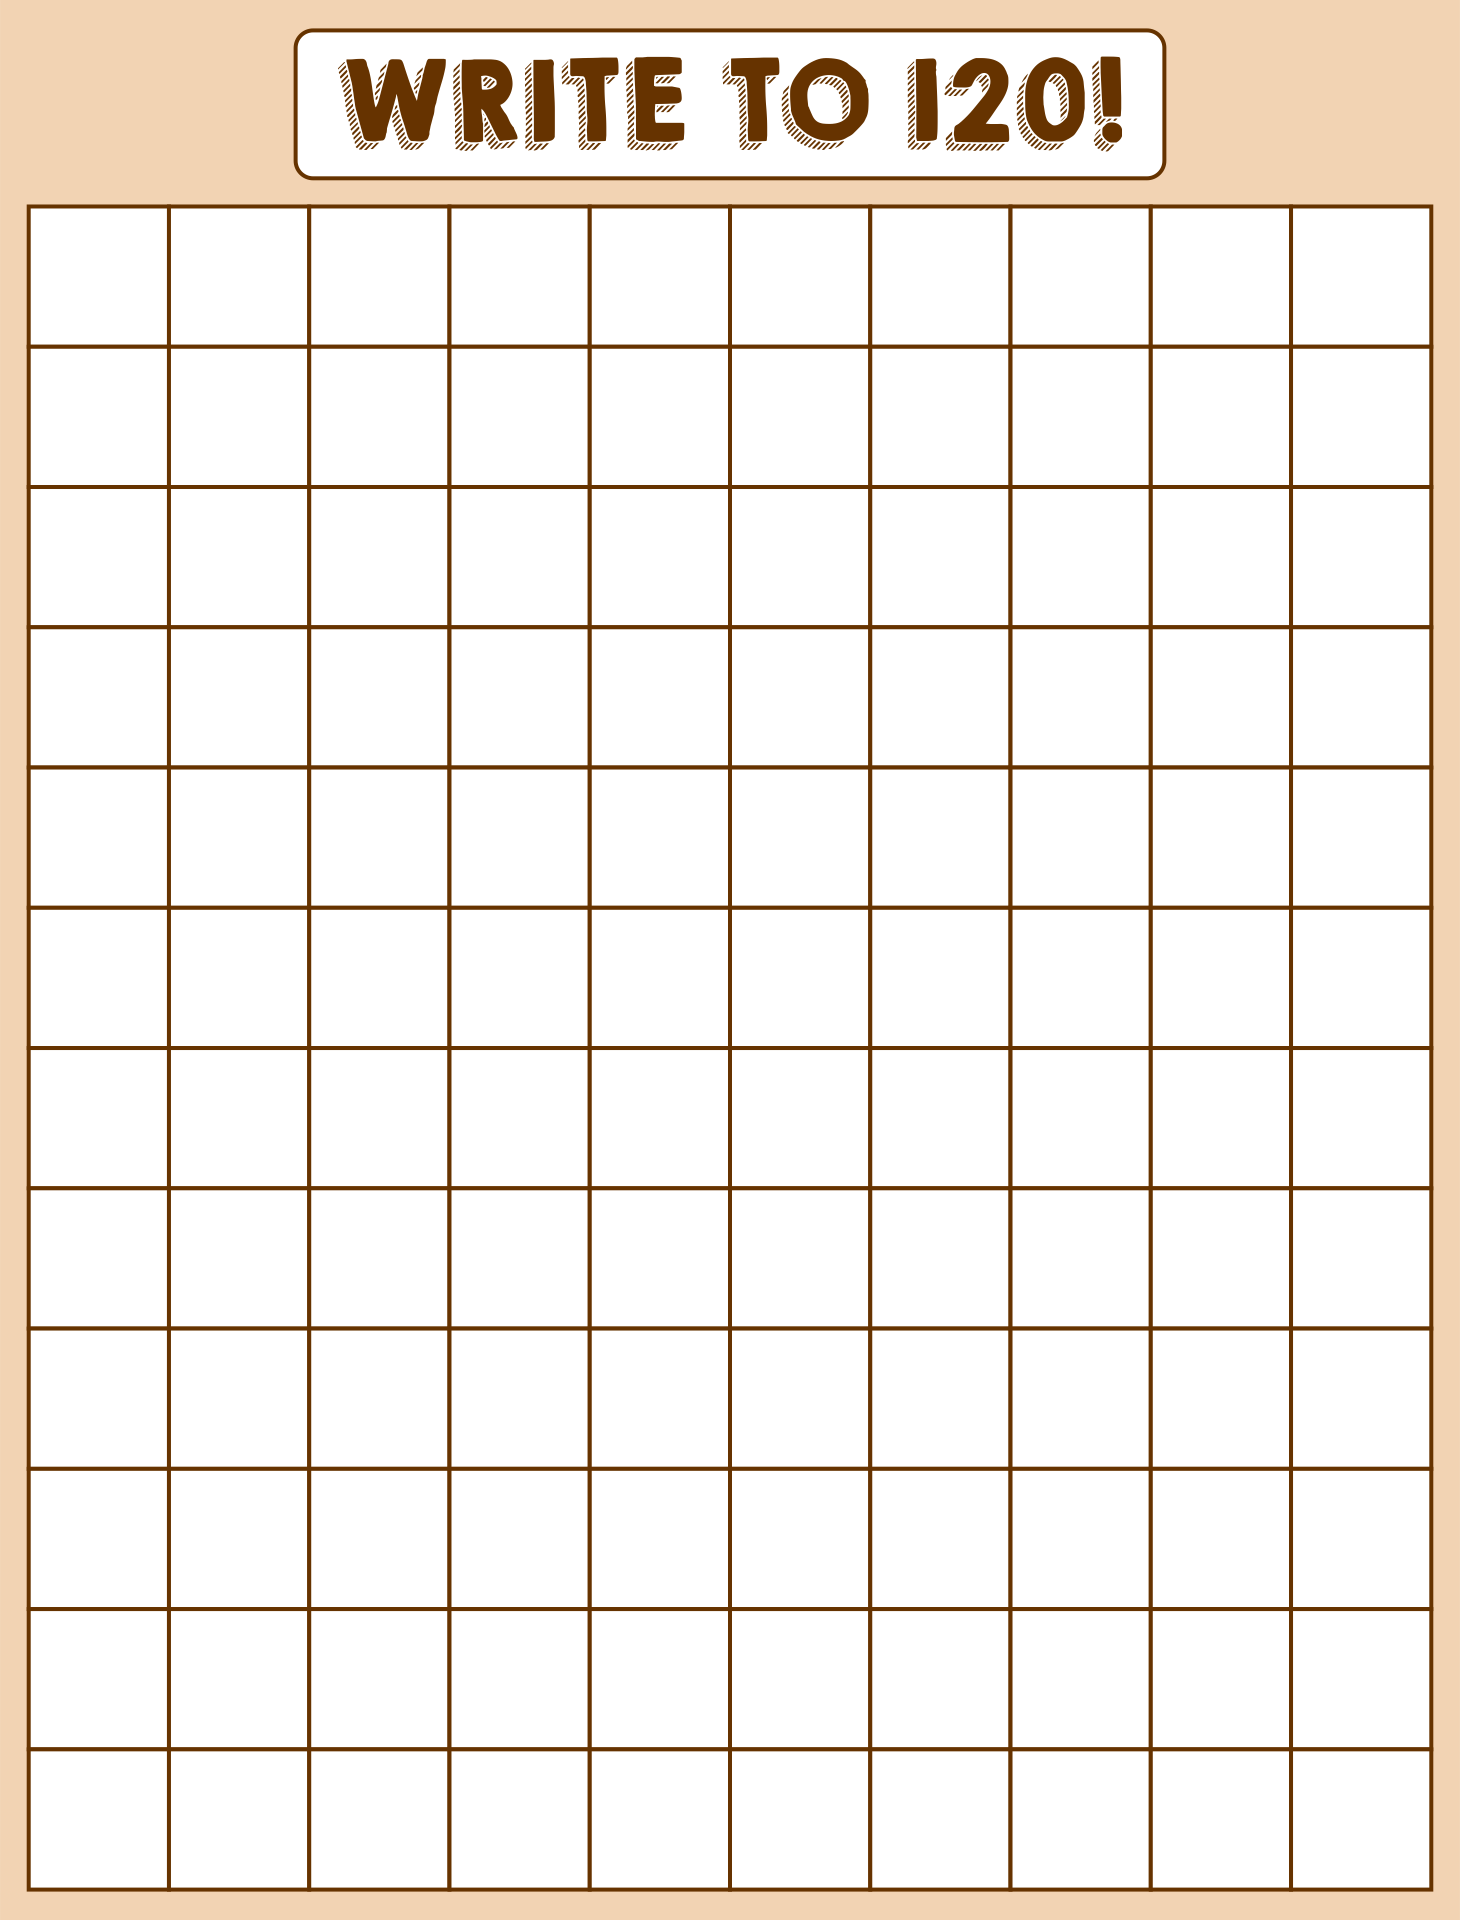 Blank Printable 120 Number Chart